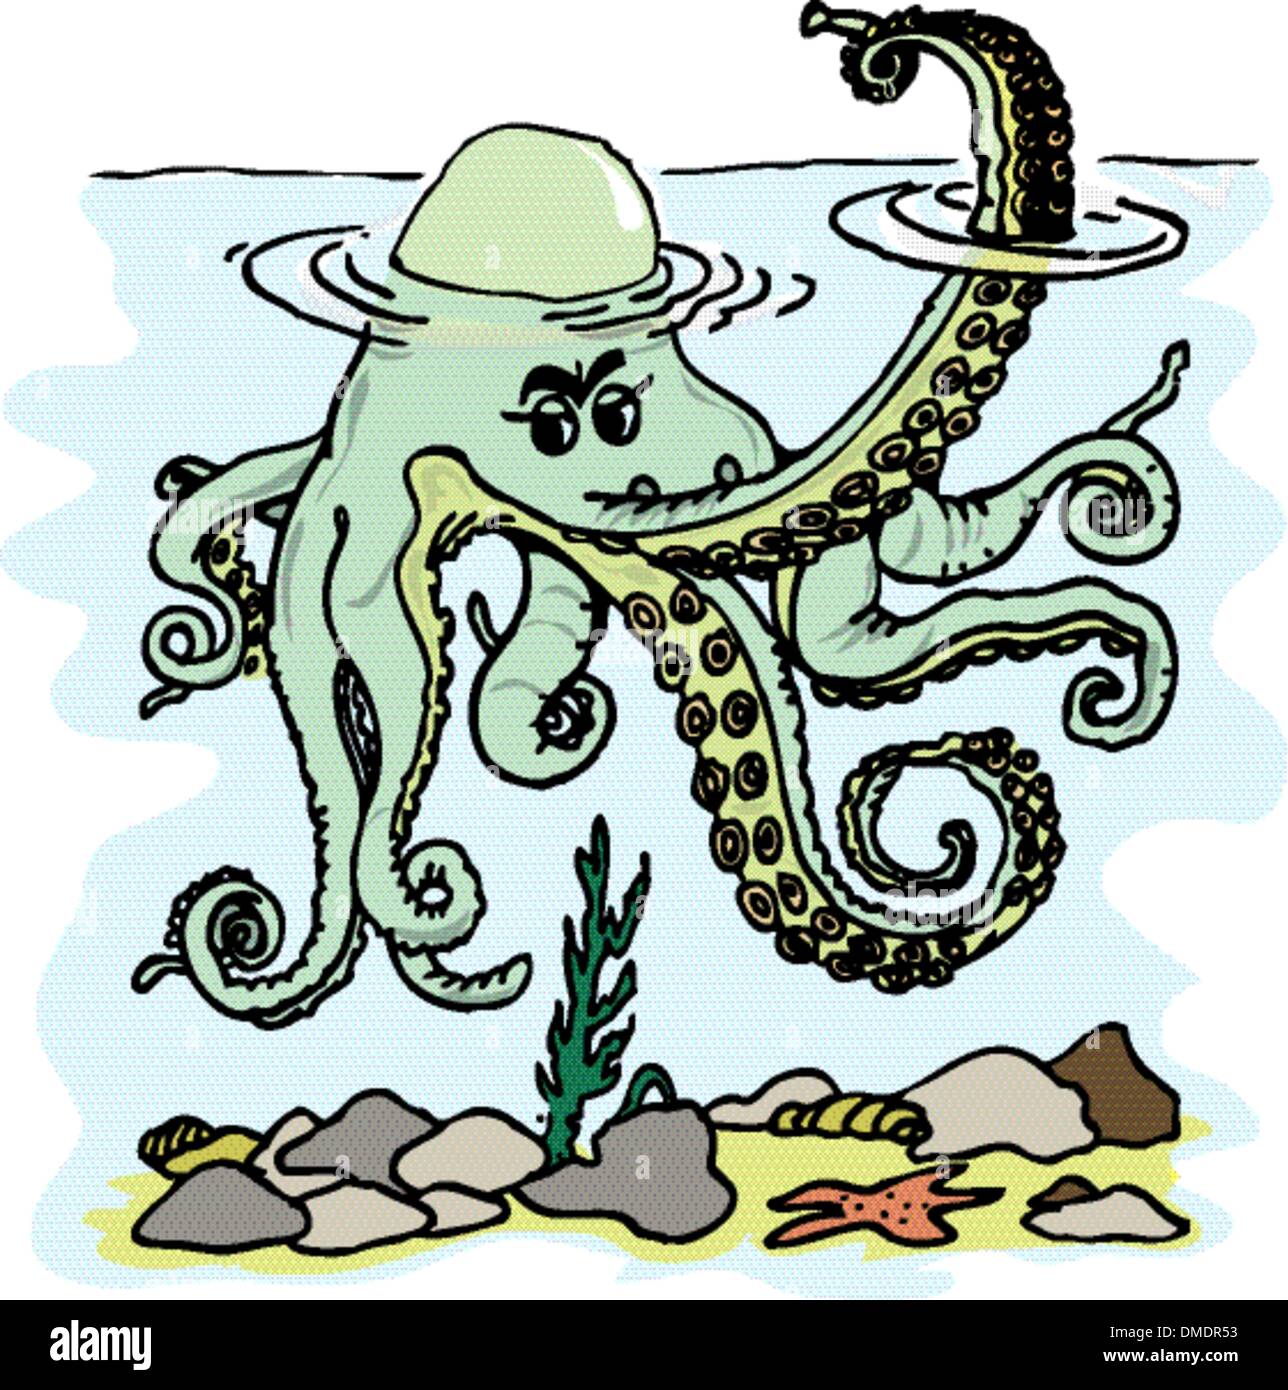 Octopus image Stock Vector